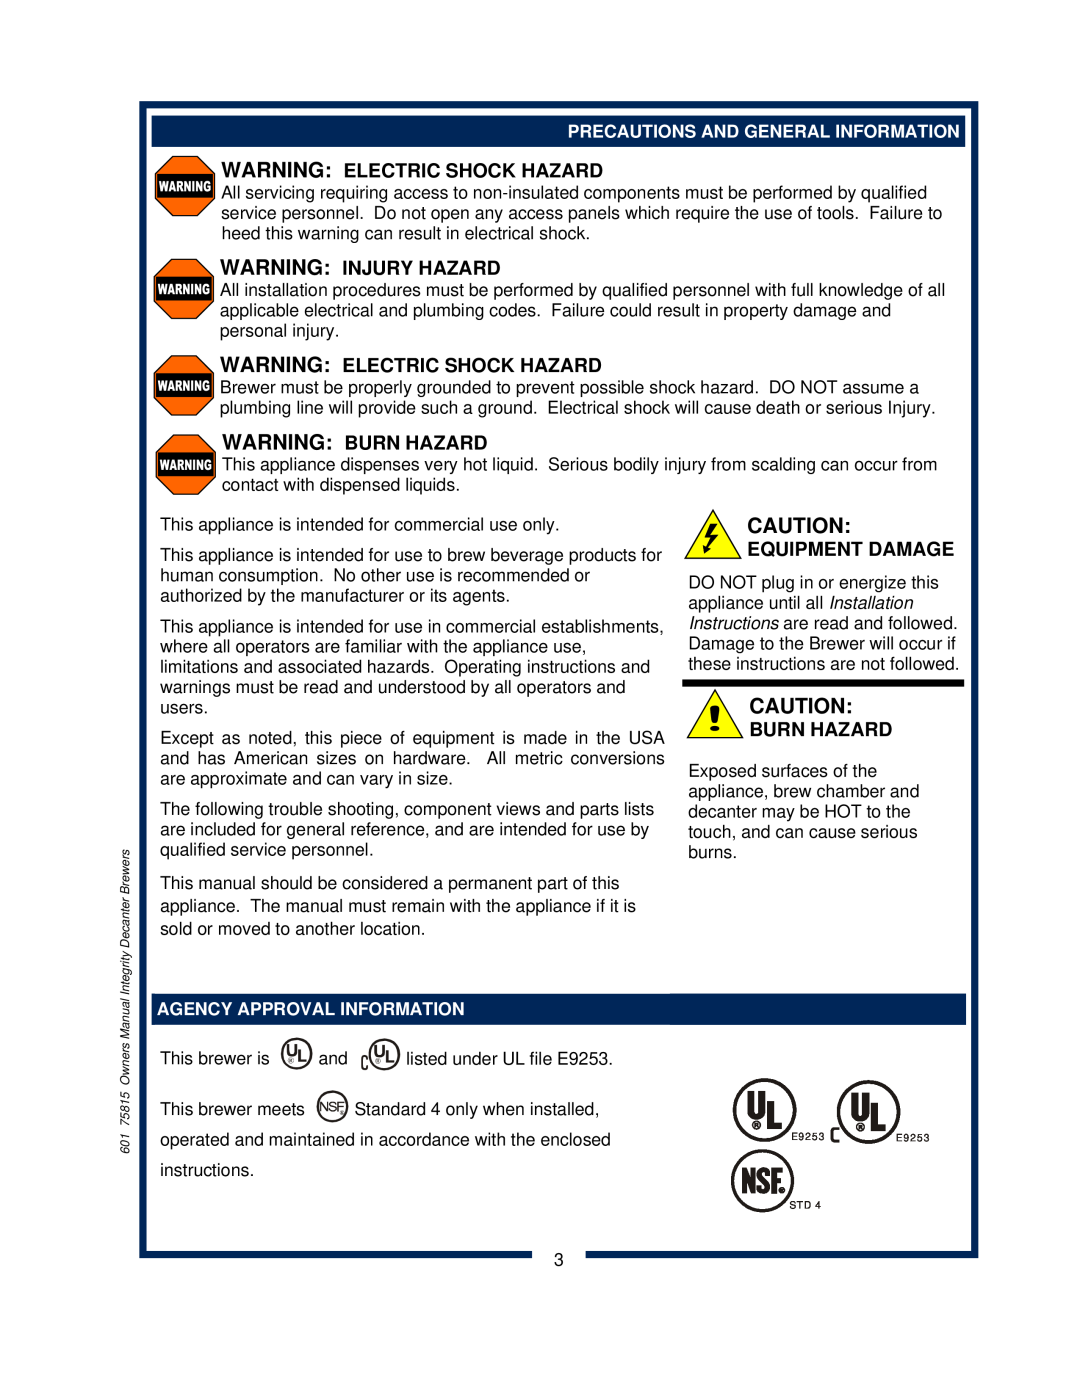 Bloomfield 9012, 9010, 9016 Warning: Electric Shock Hazard, Warning: Injury Hazard, Warning: Burn Hazard, Equipment Damage 